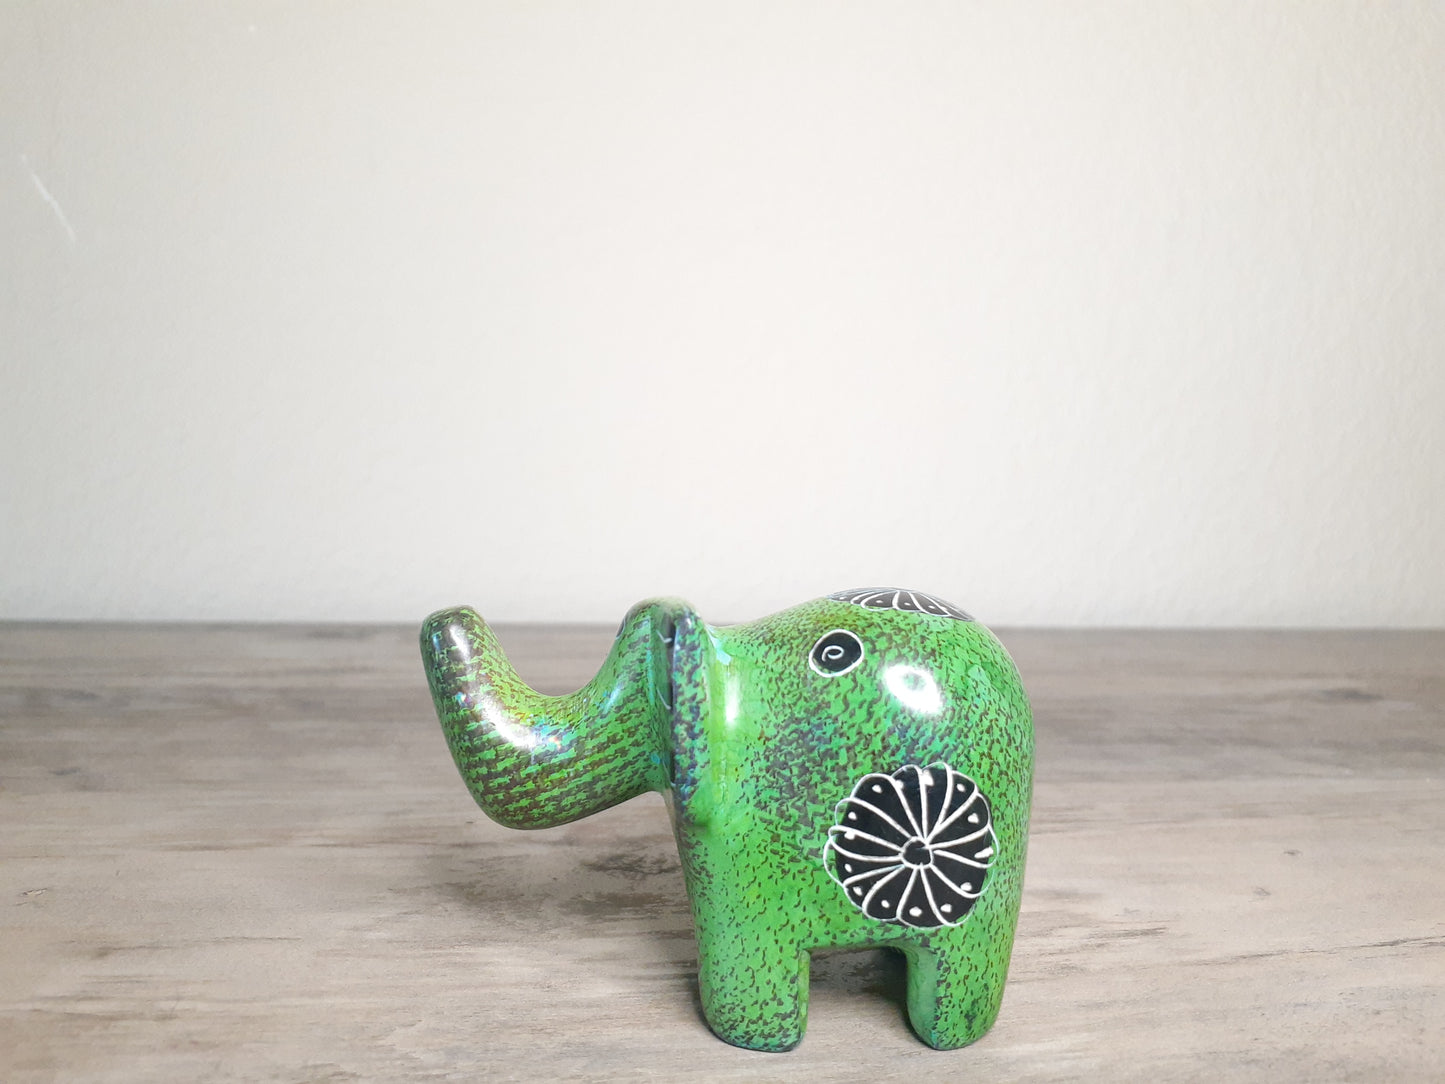 Colorful Elephant Sculptures